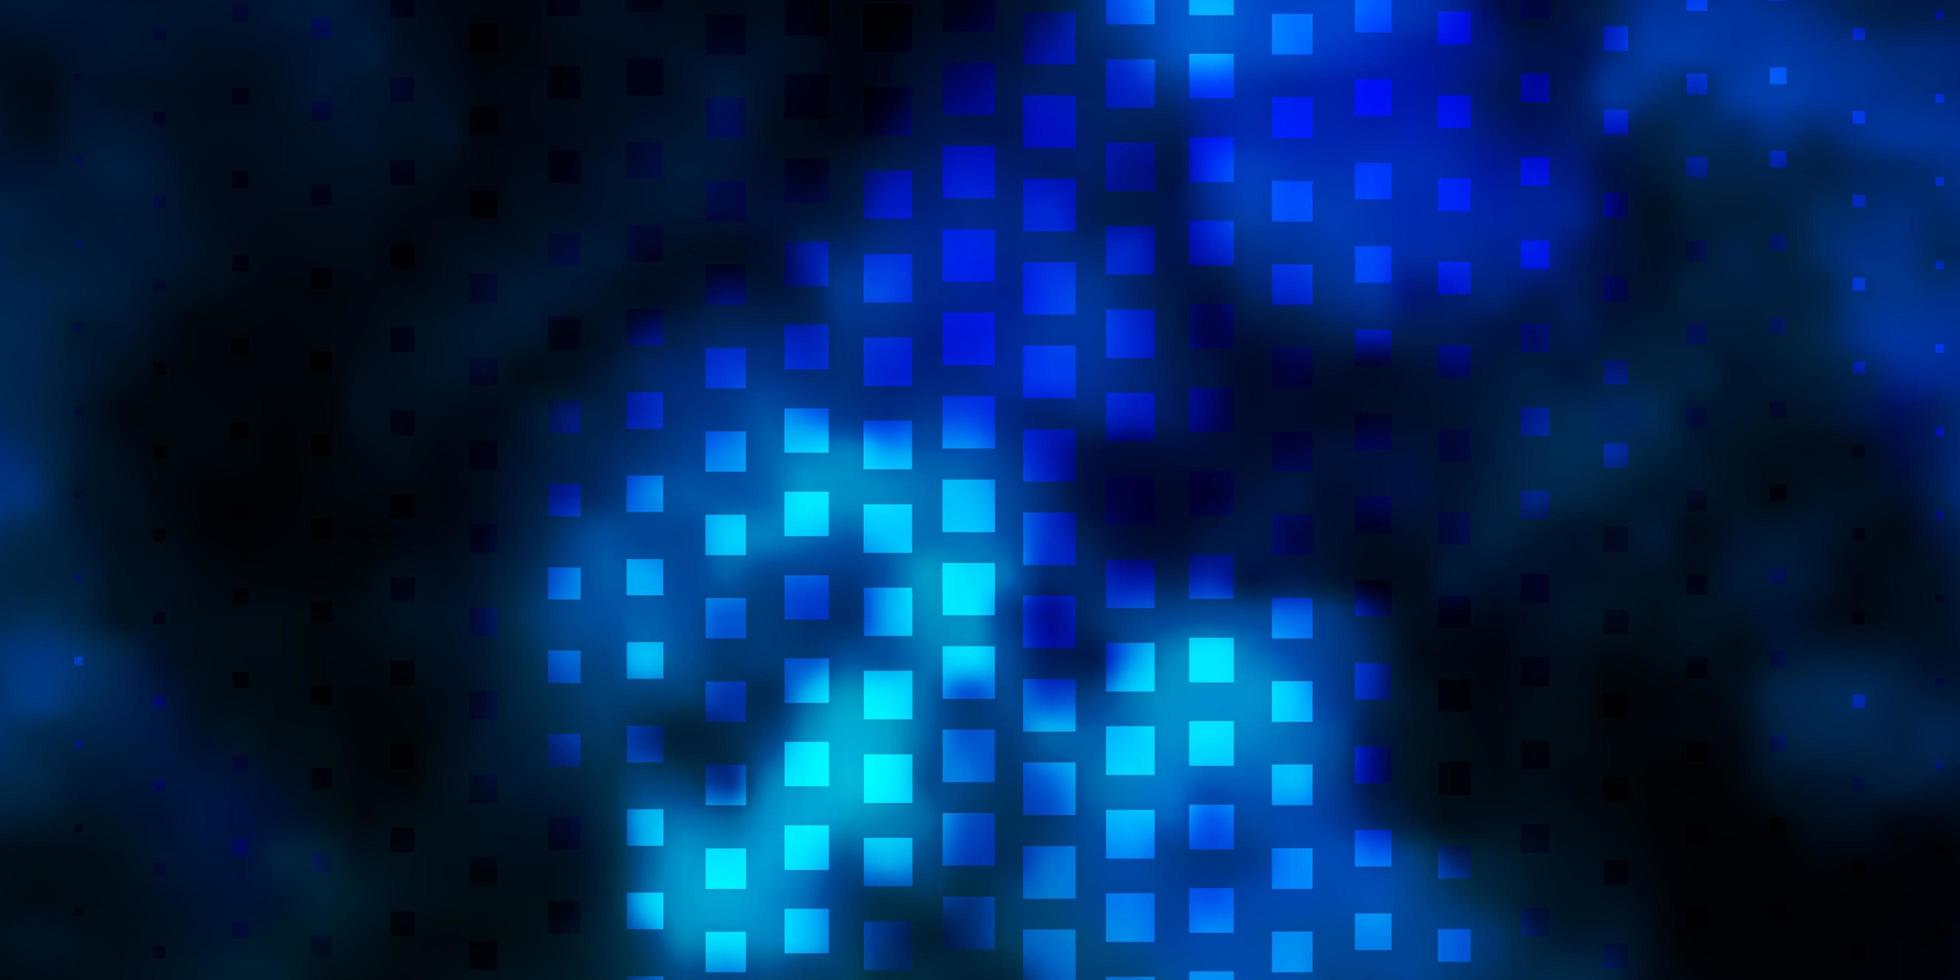 textura de vector azul claro en ilustración de estilo rectangular con un conjunto de patrón de rectángulos degradados para folletos de folletos de negocios